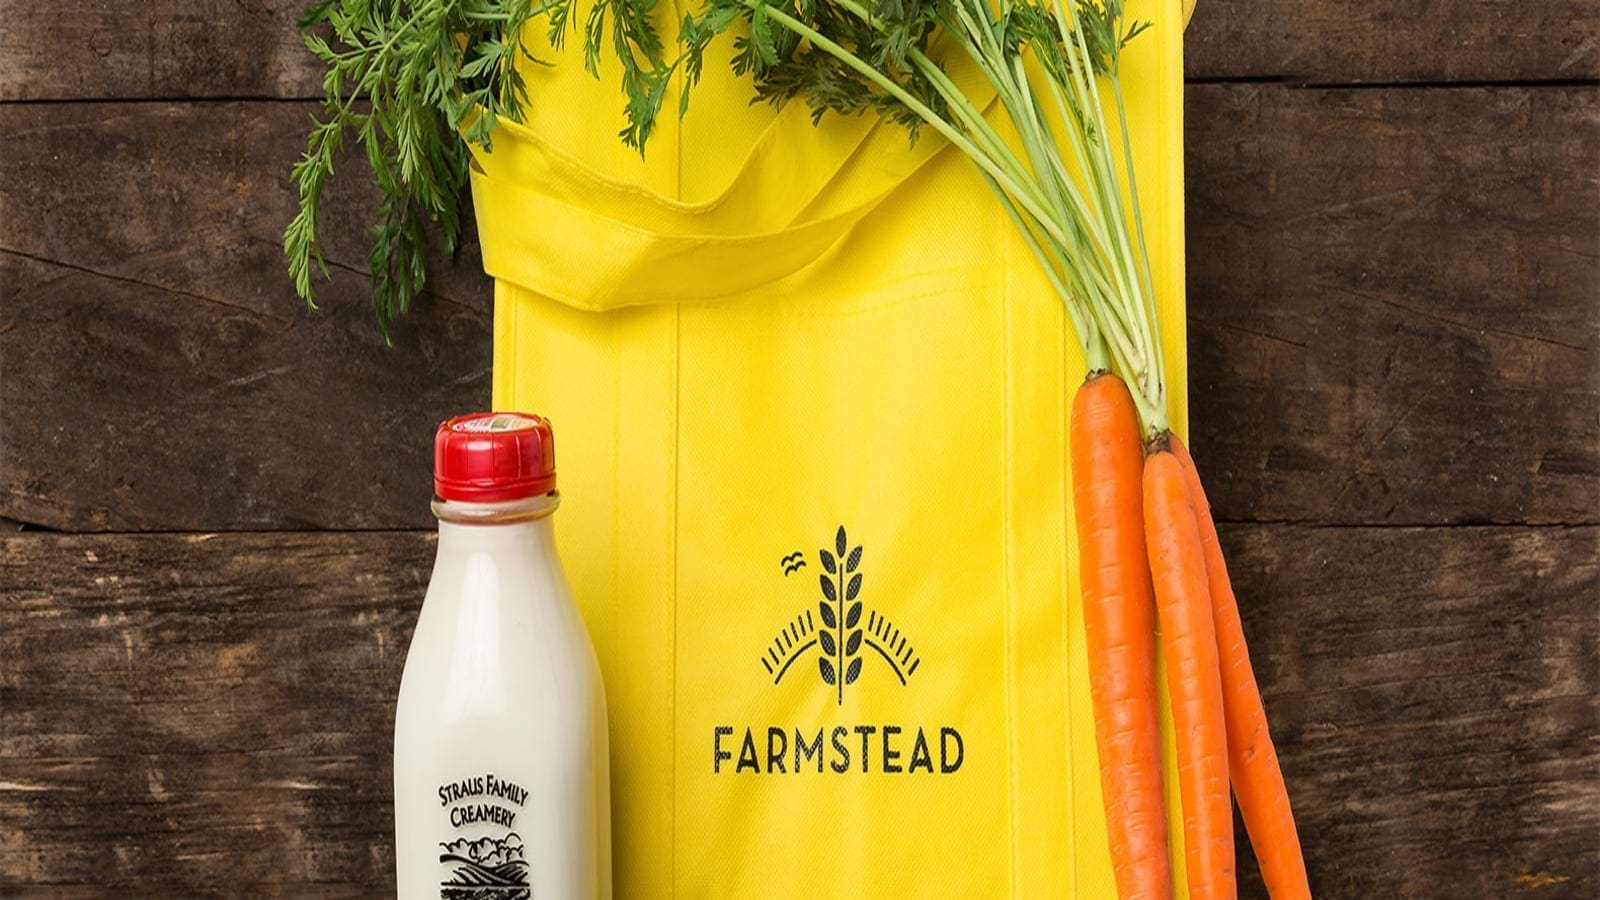 US online grocer Farmstead raises US$7.9 million to expand ecommerce platform